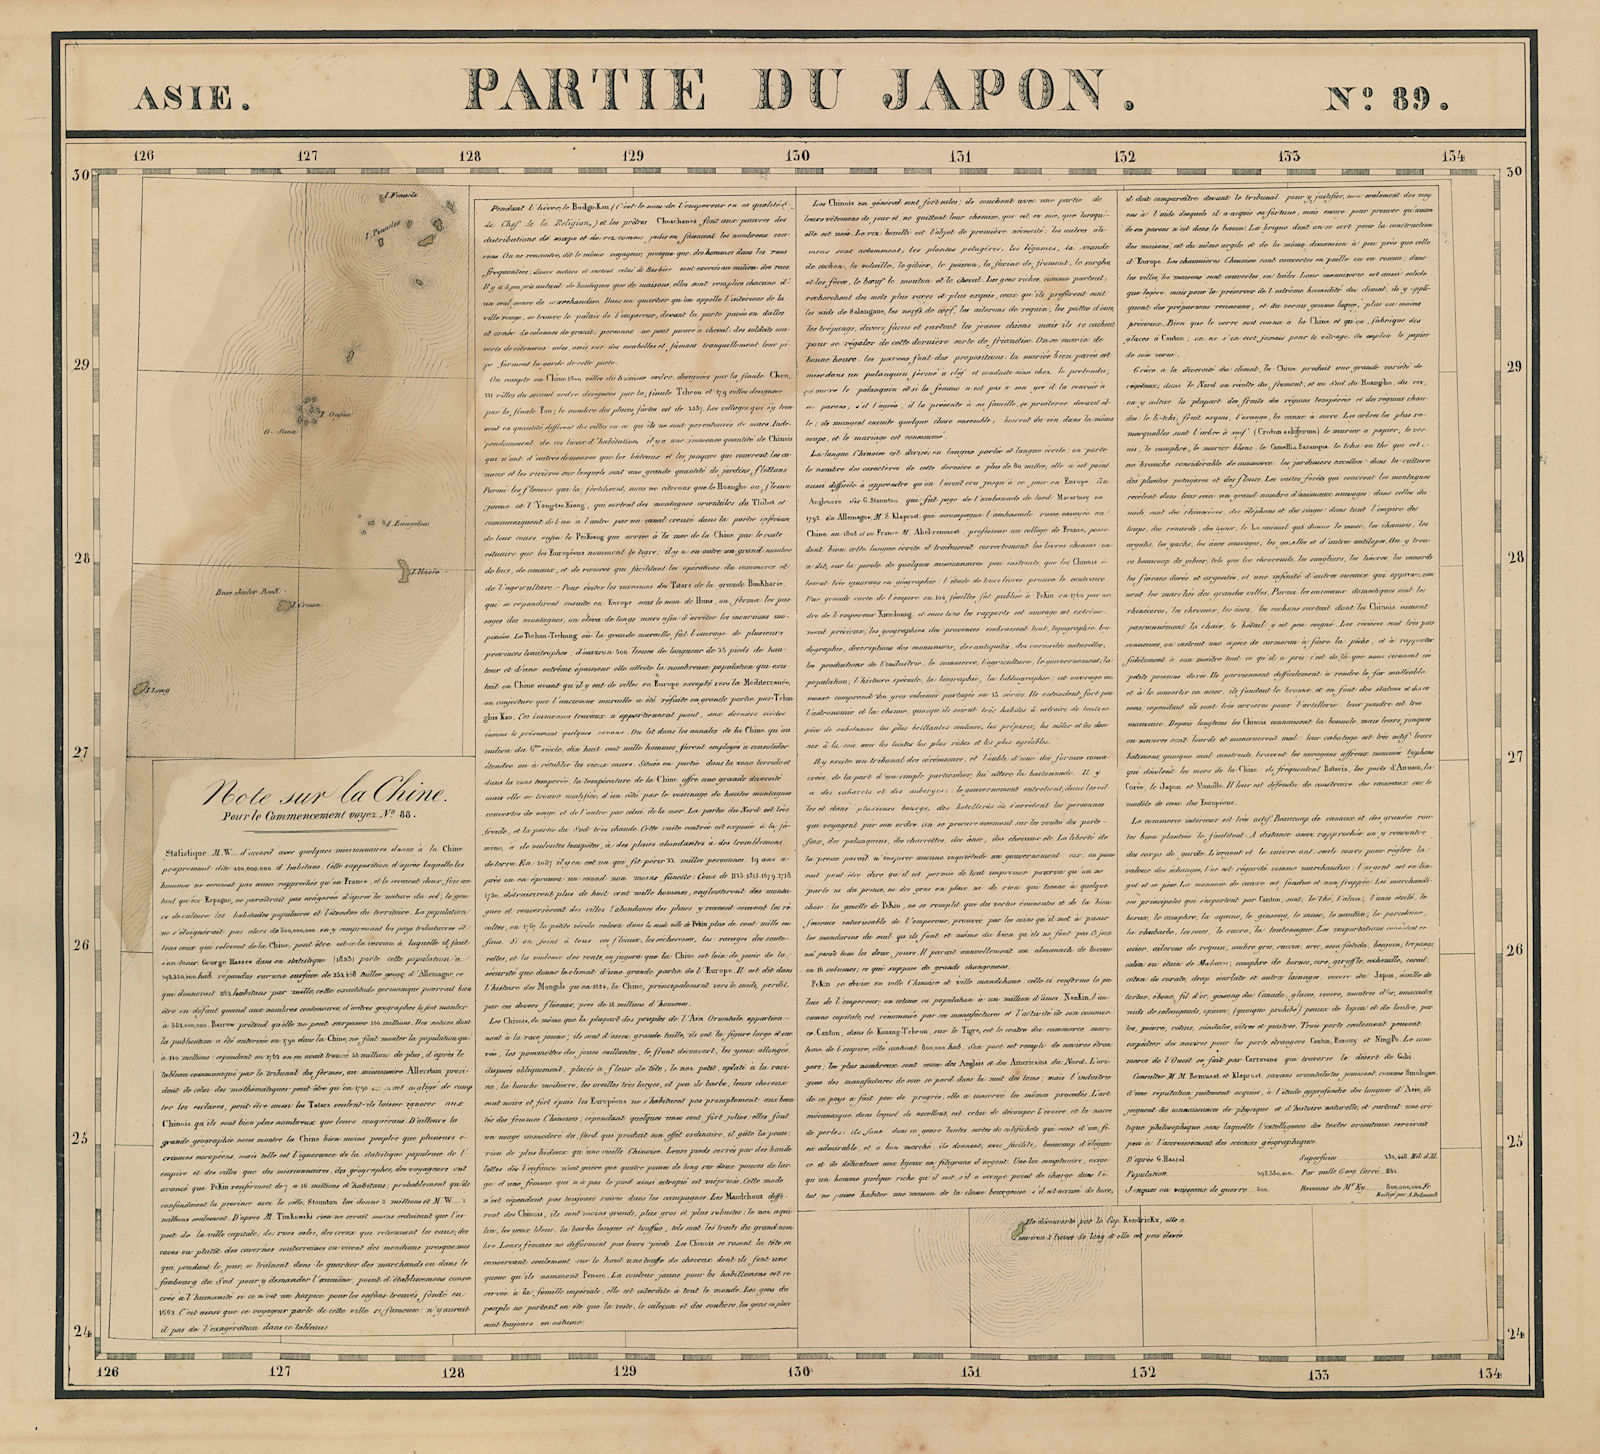 Asie. Partie du Japon #89 Amami/Ryukyu Islands Japan. VANDERMAELEN 1827 map